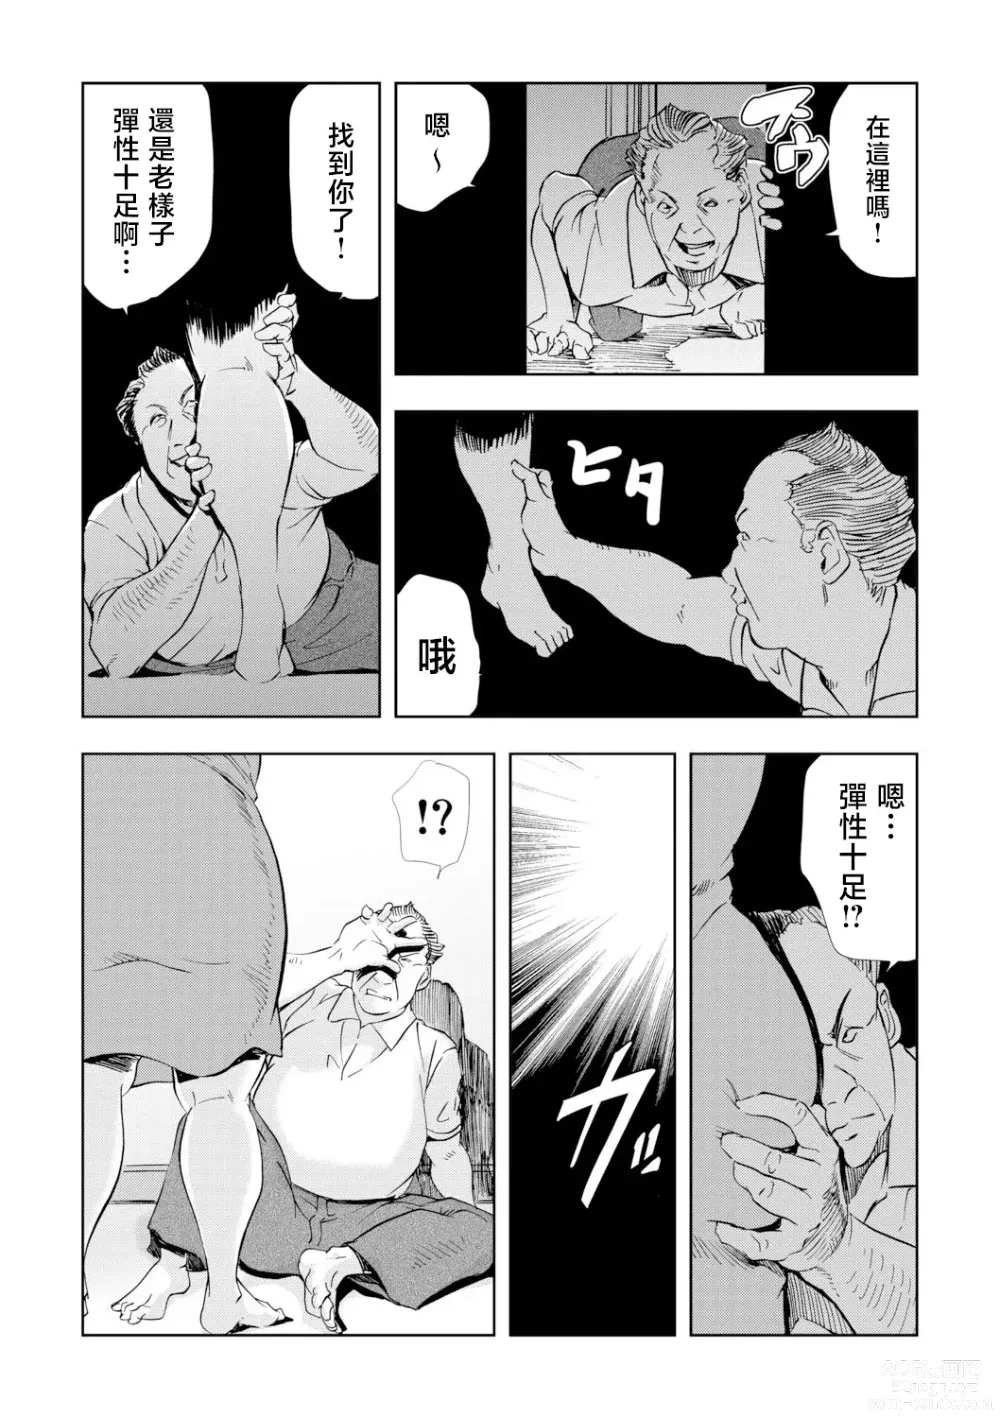 Page 27 of manga Netorare Vol.03